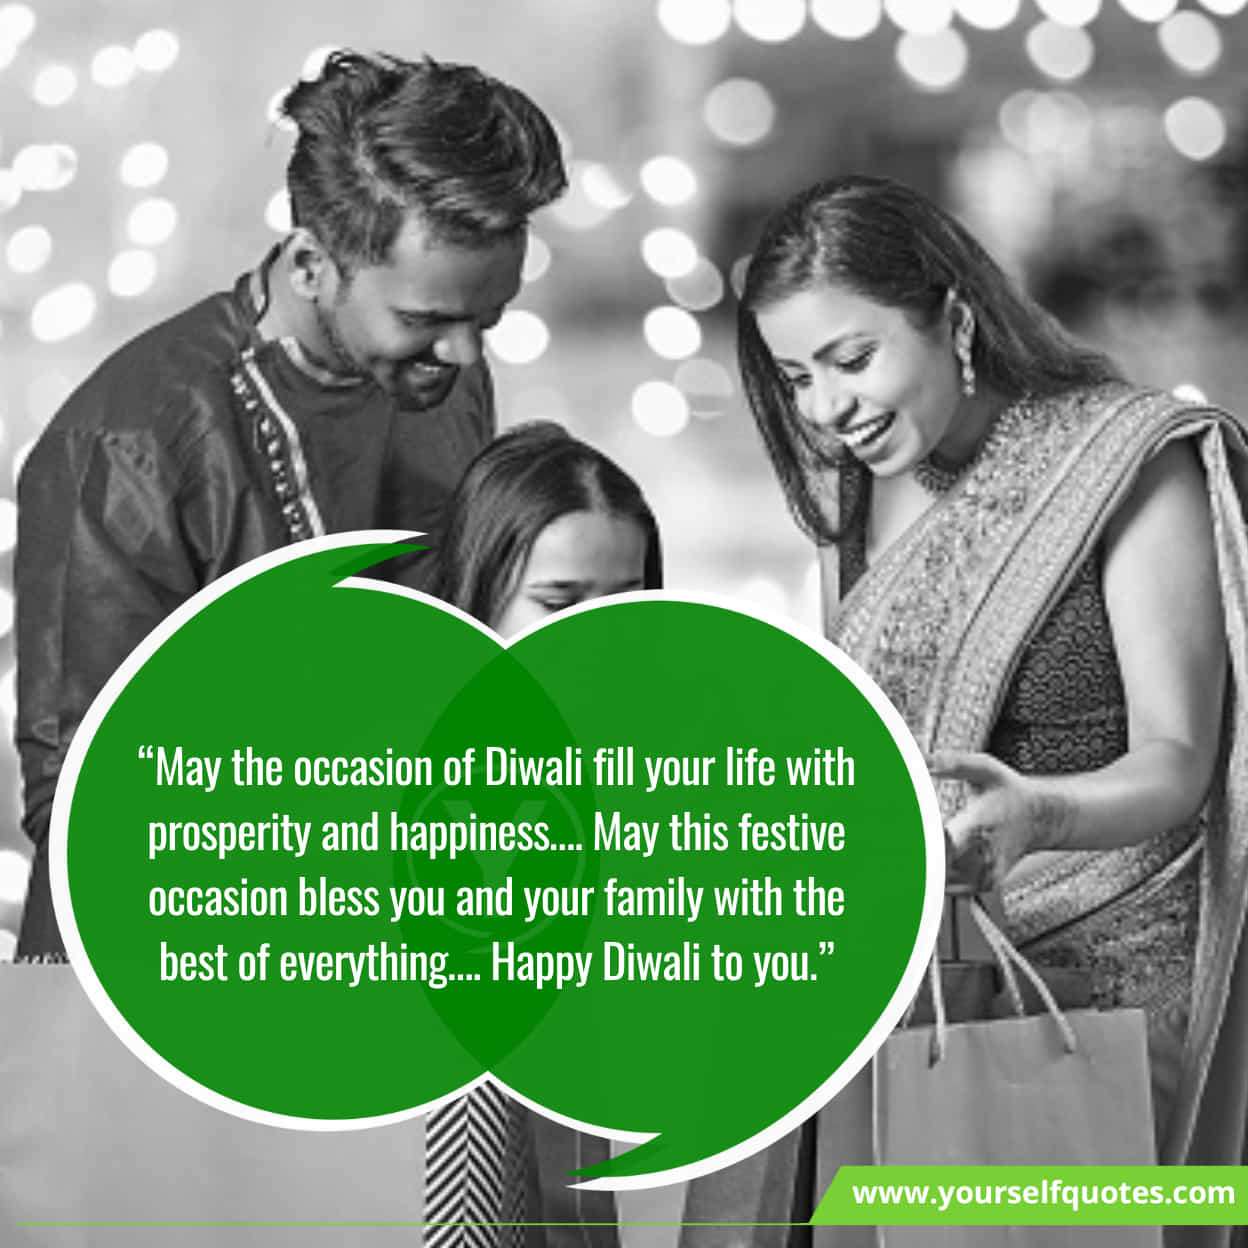 Diwali Messages for Clients